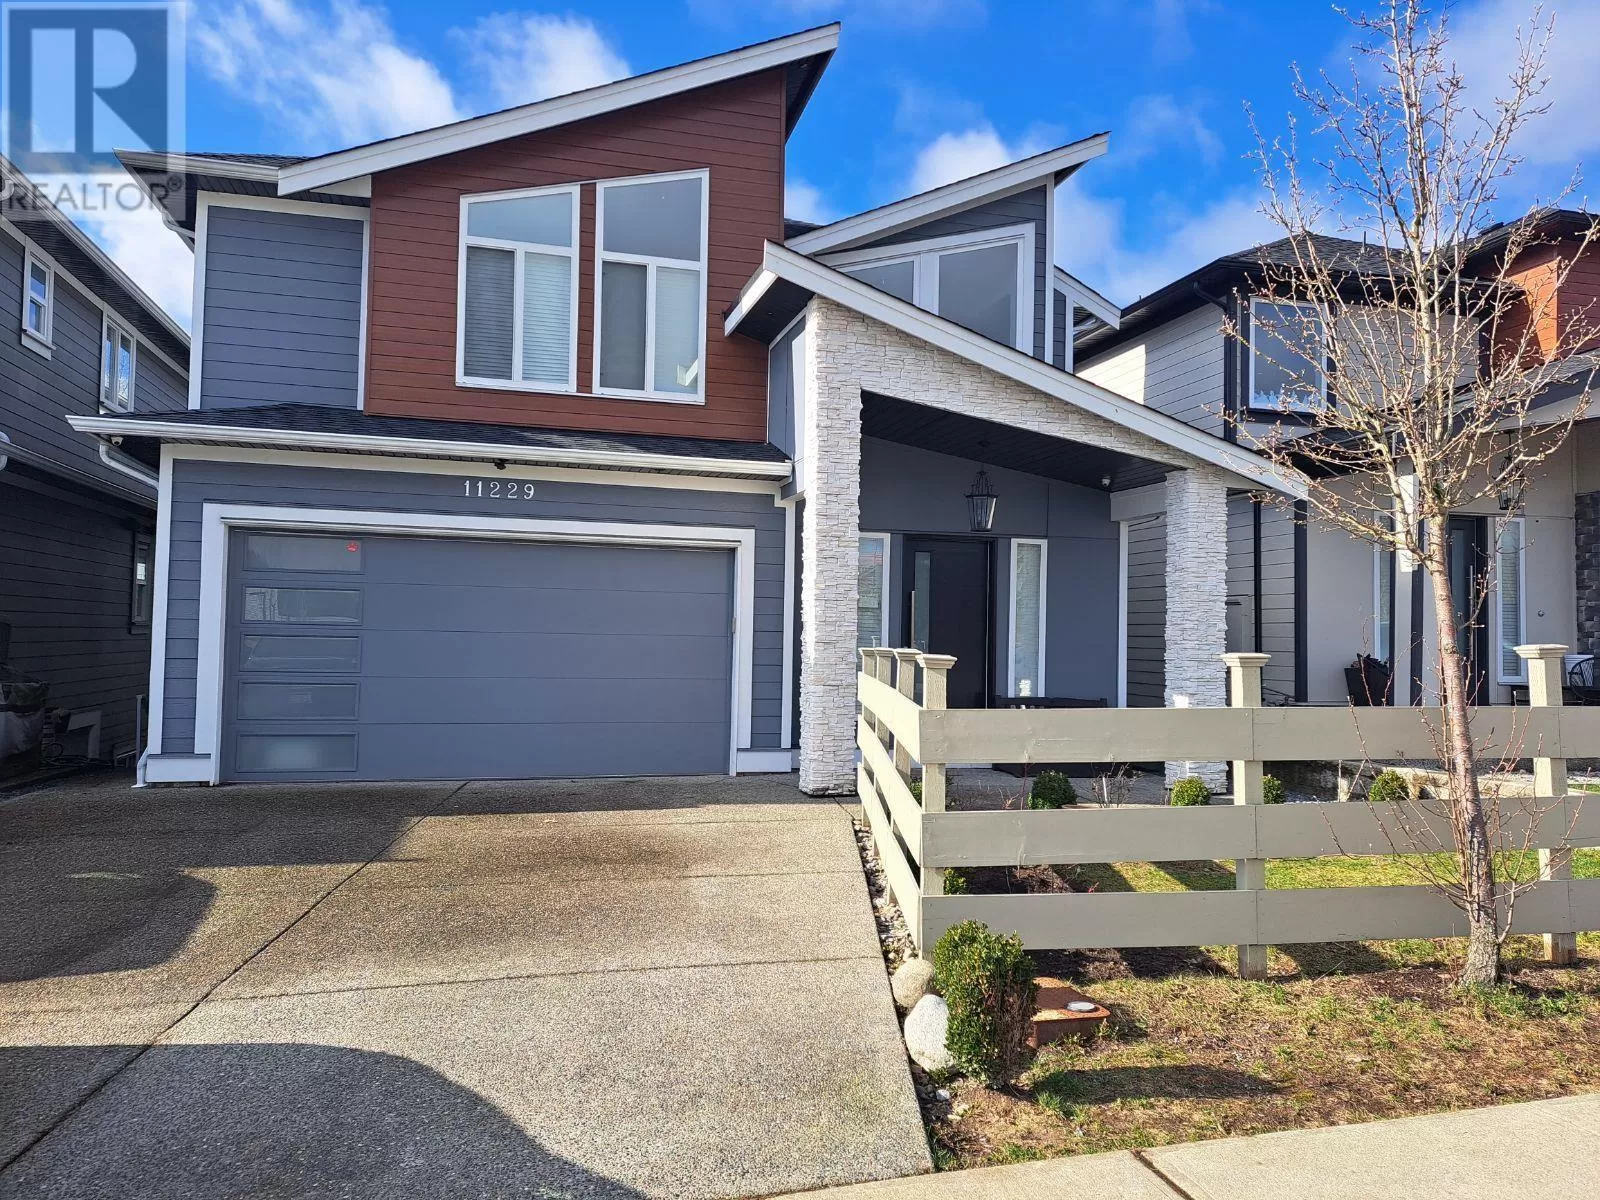 House for rent: 11229 238 Street, Maple Ridge, British Columbia V2W 1V4